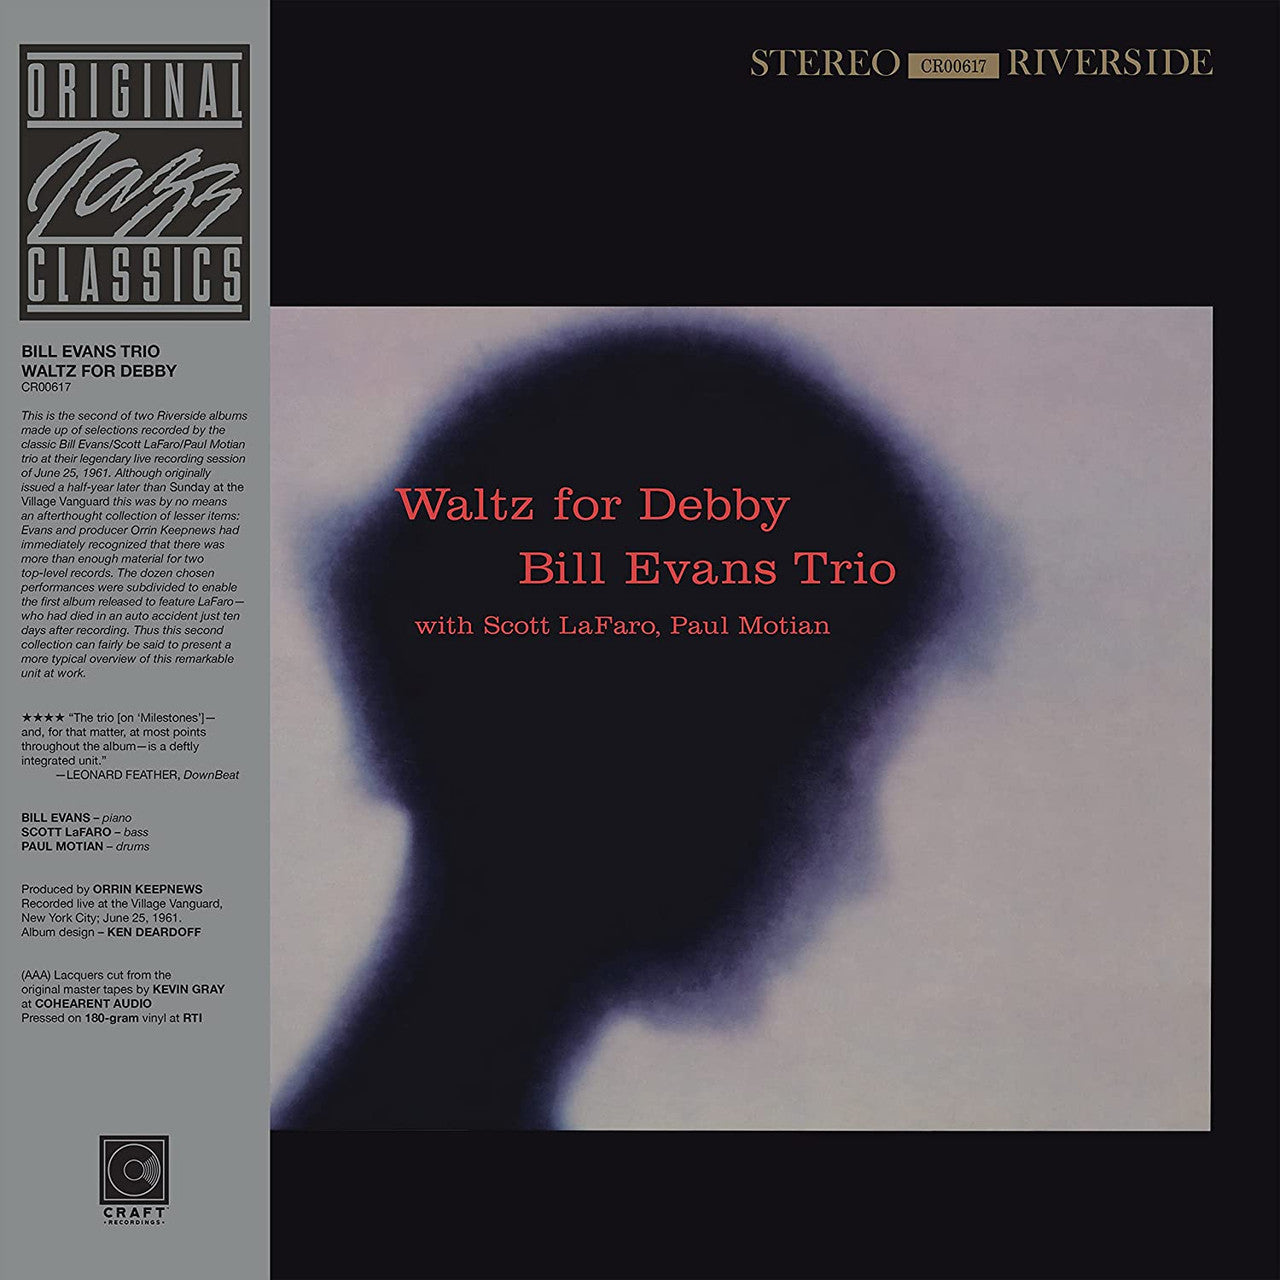 (Pre-pedido) Bill Evans Trio - Vals para Debby - OJC LP